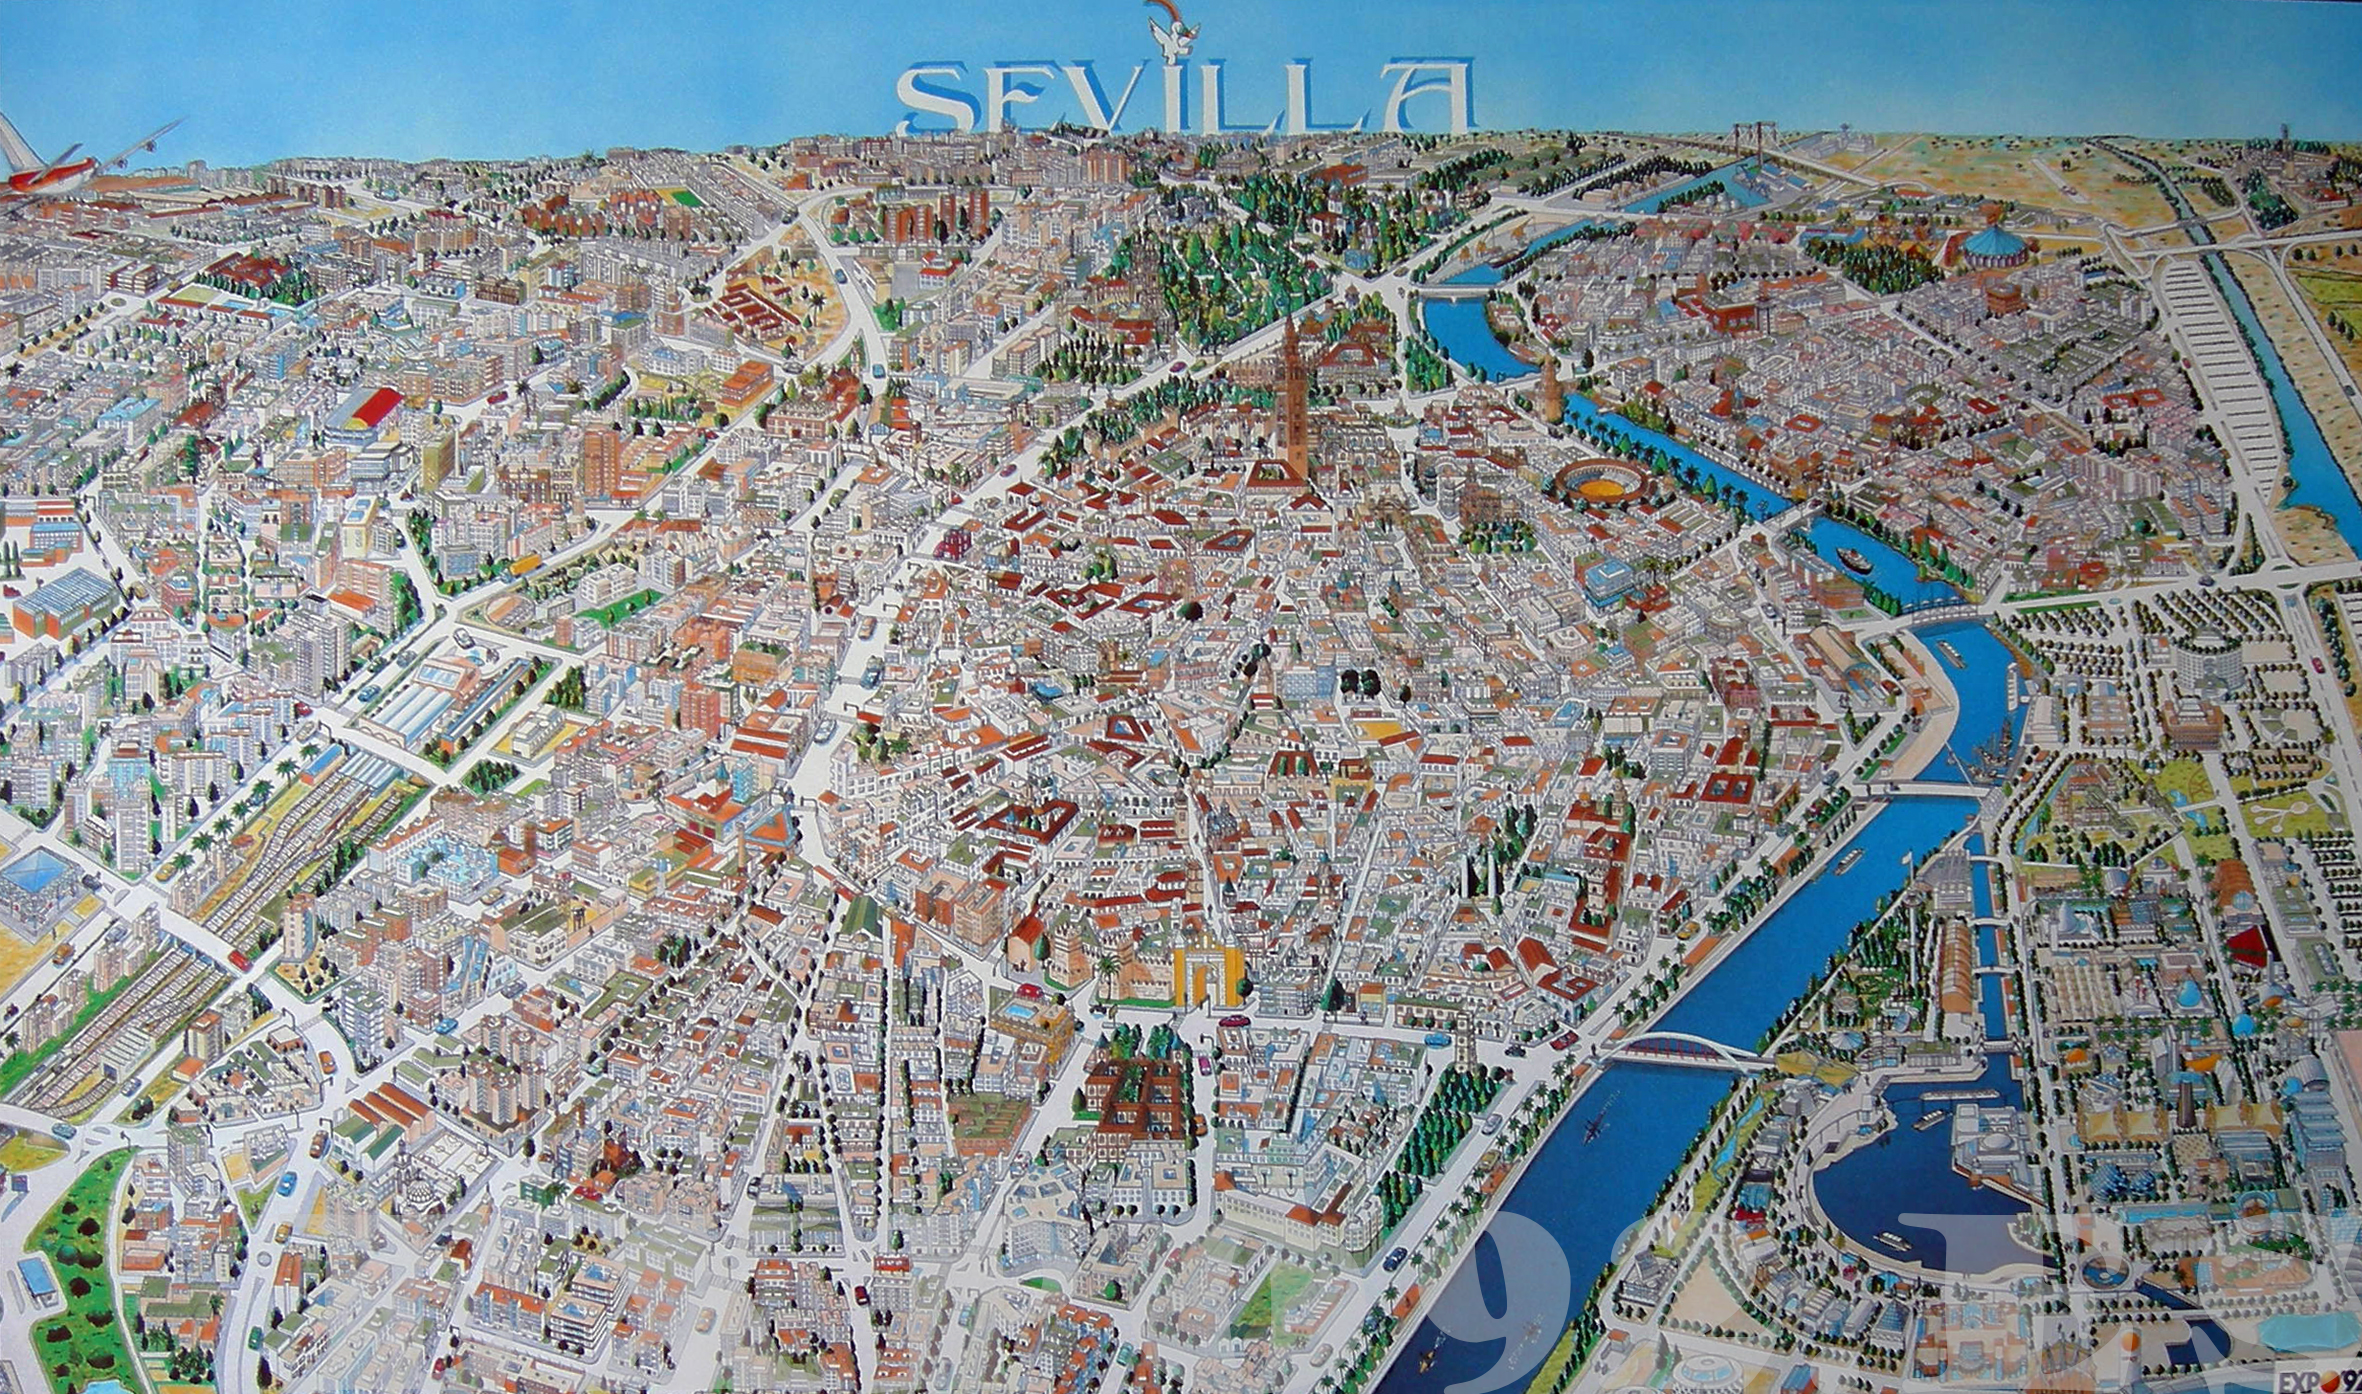 Plano dibujado a mano, donde se vio por primera vez la union de Sevilla con la Isla de La Cartuja.